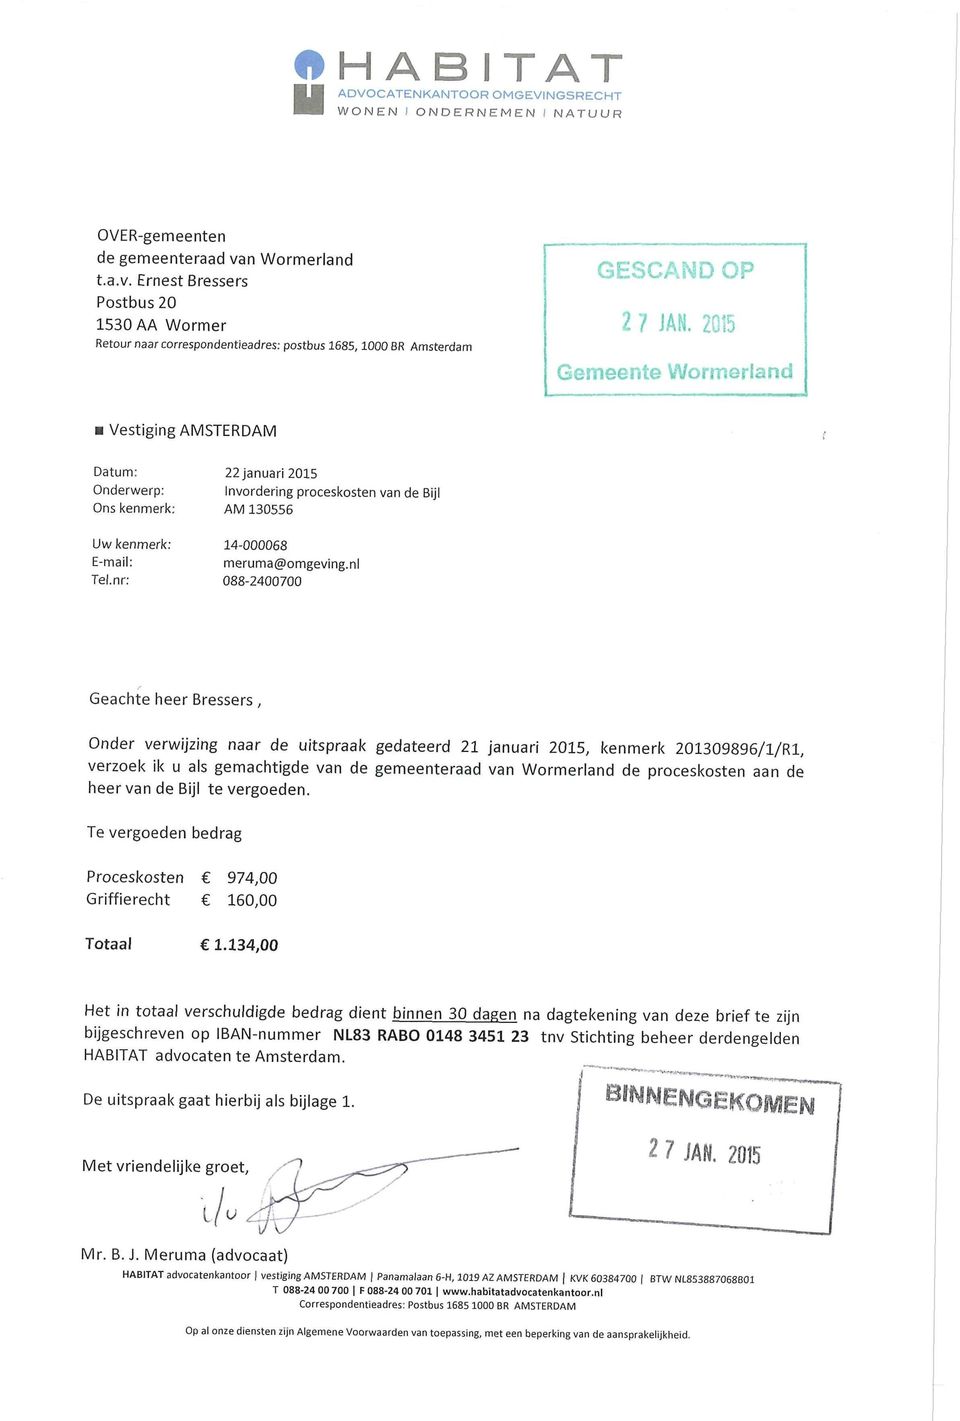 2015 Gemeente Wormerland Vestiging AMSTERDAM Datum 22 januari 2015 Onderwerp- Invordering proceskosten van de Bijl Ons kenmerk. AM 130556 Uw kenmerk: 14-000068 E-mail: meruma(a)omgevmg.nl Tel.